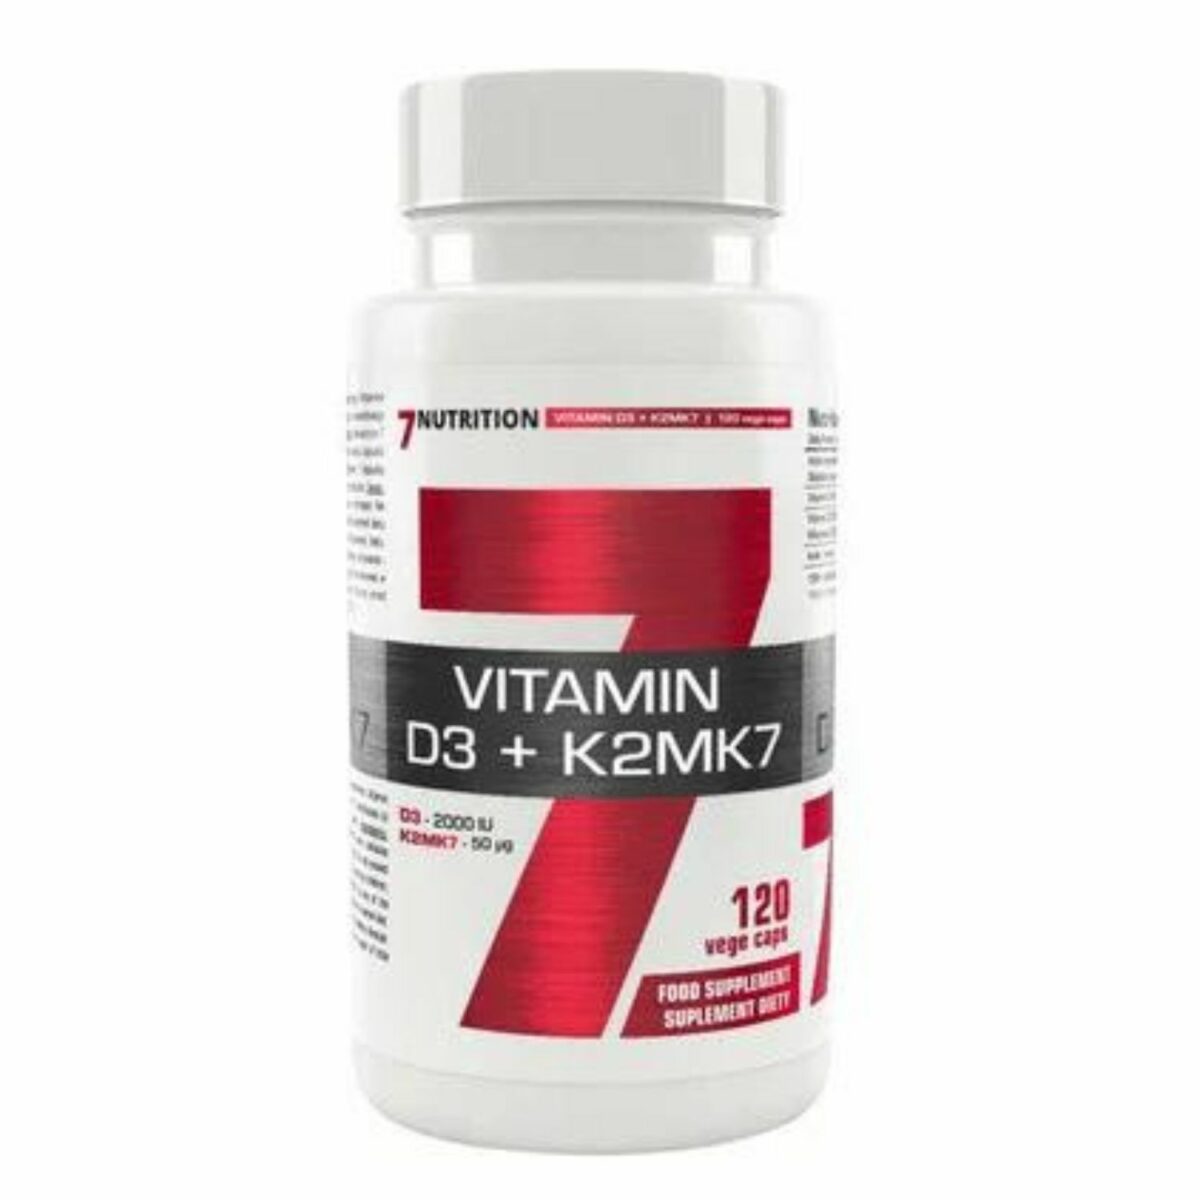 7Nutrition vitamin D3+K2MK7 120 kapsula